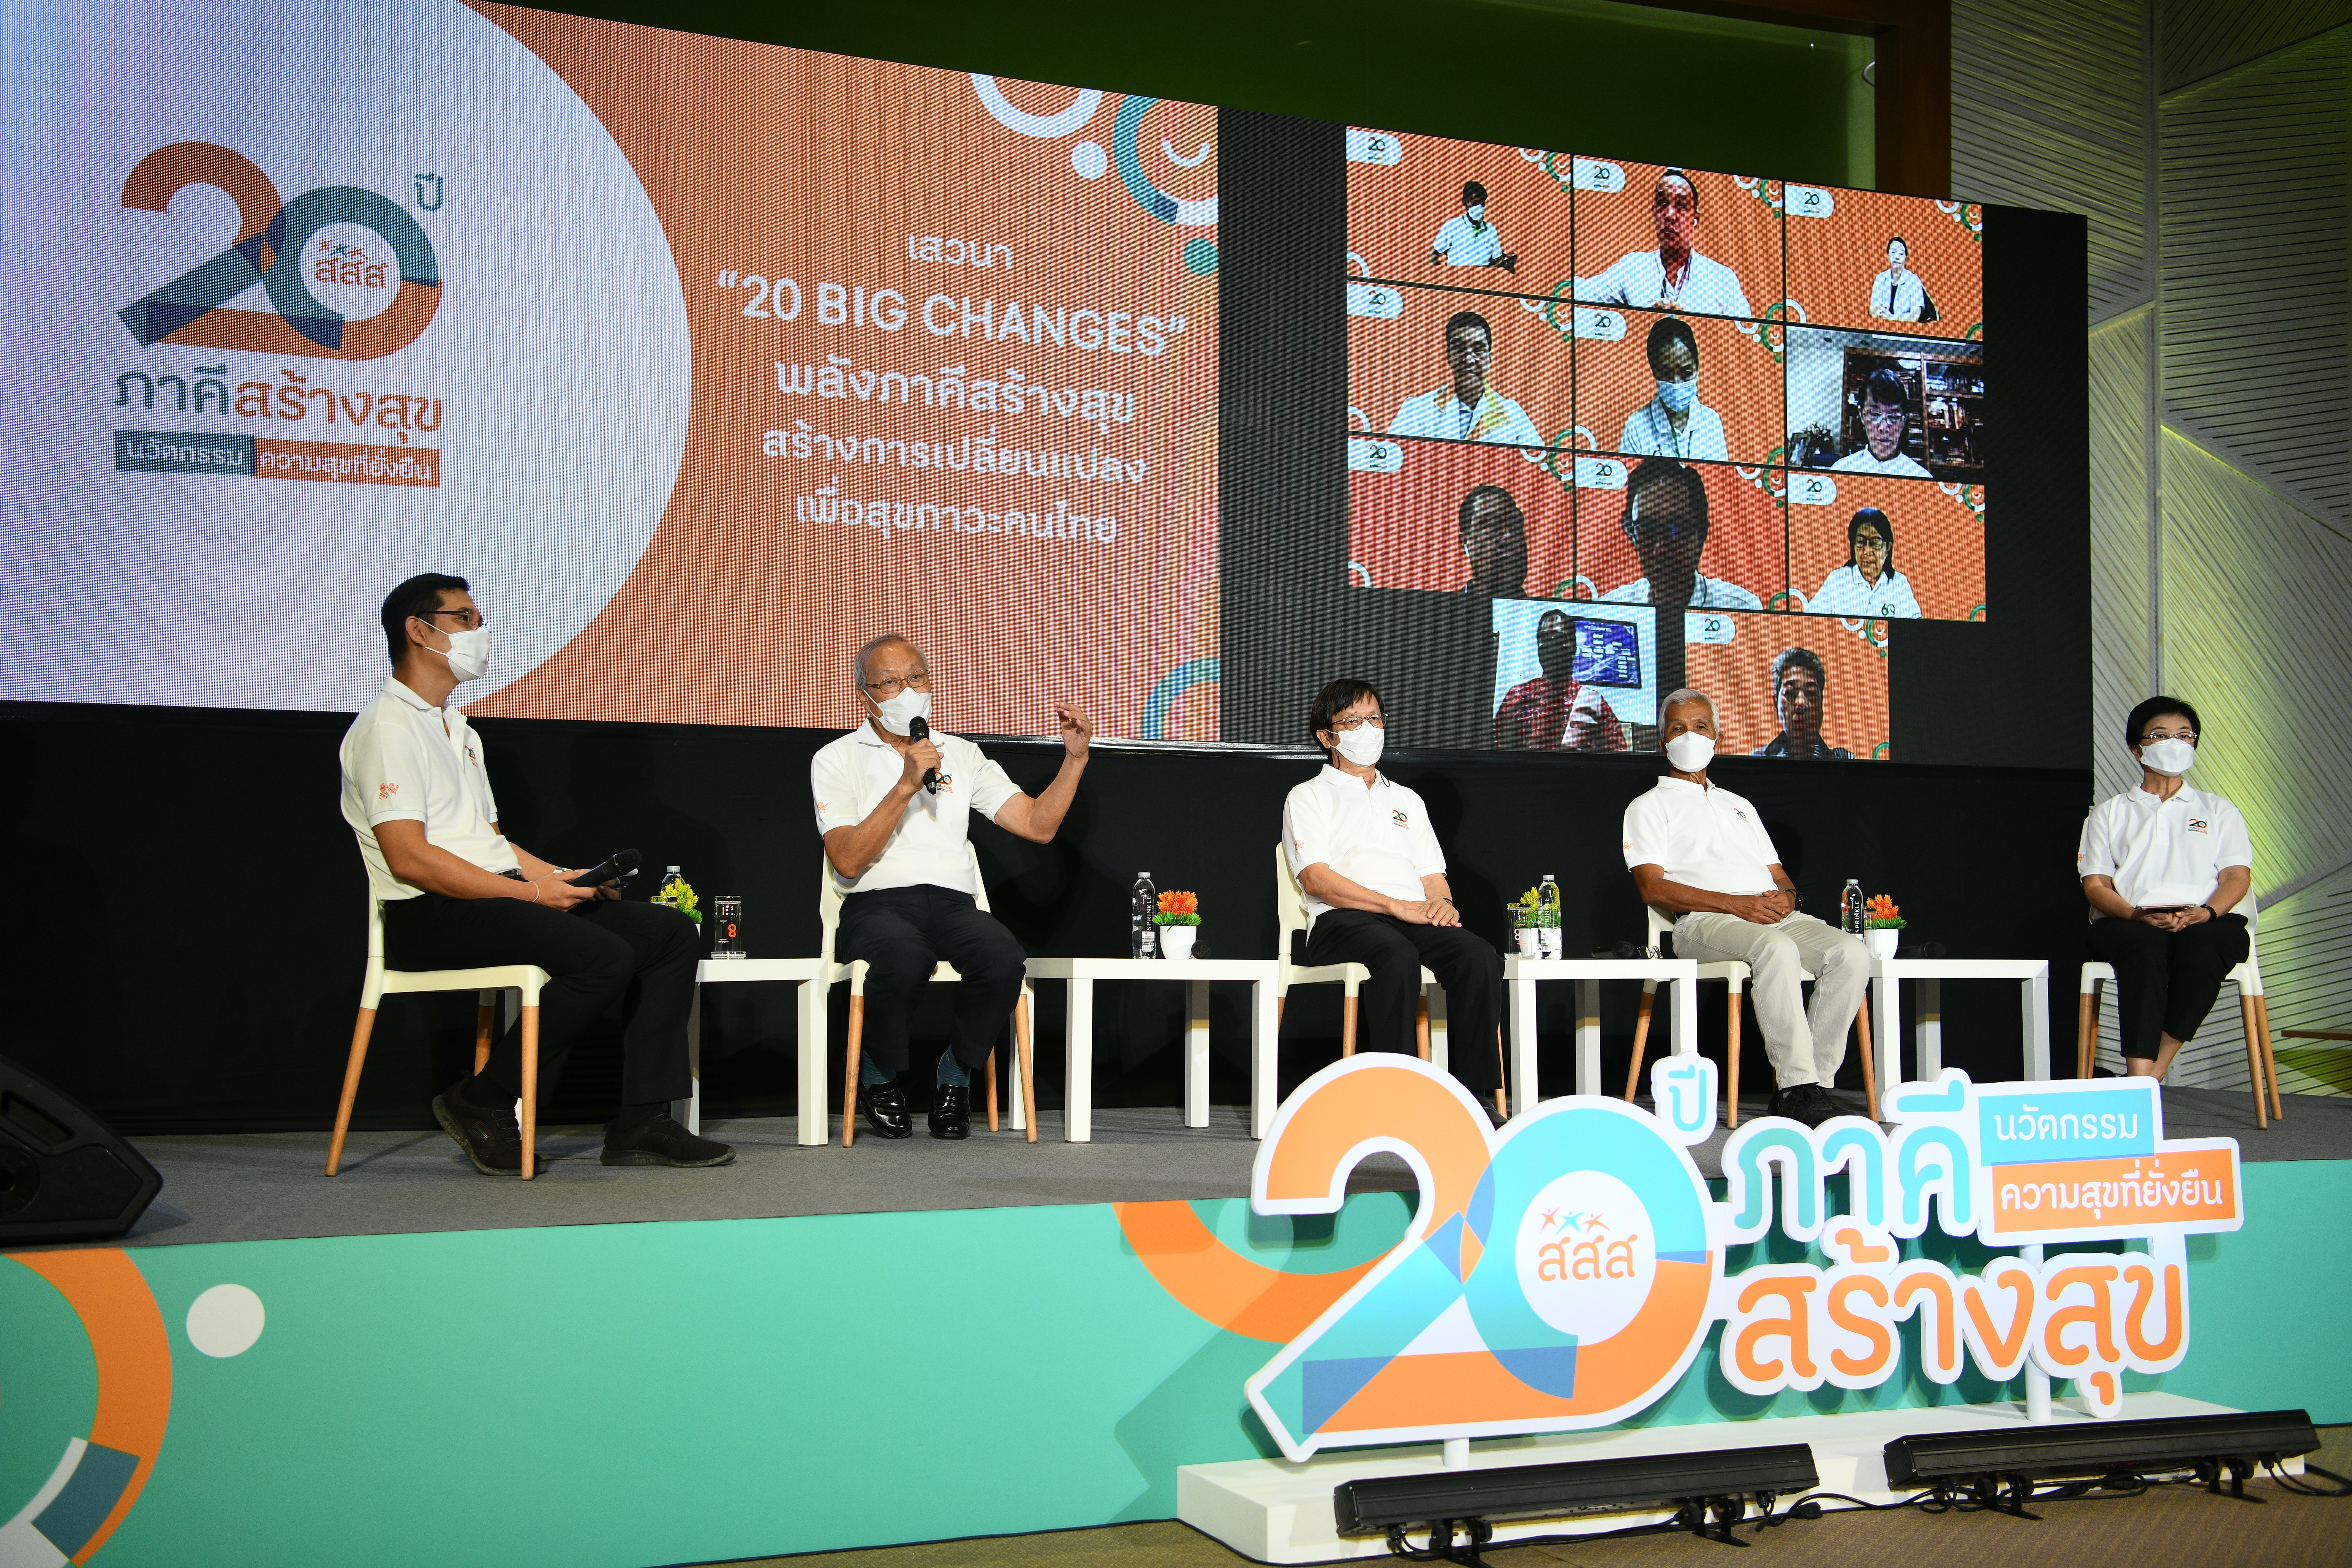 20 BIG CHANGES  พลังภาคีสร้างสุข สร้างการเปลี่ยนแปลงเพื่อสุขภาวะคนไทย  thaihealth